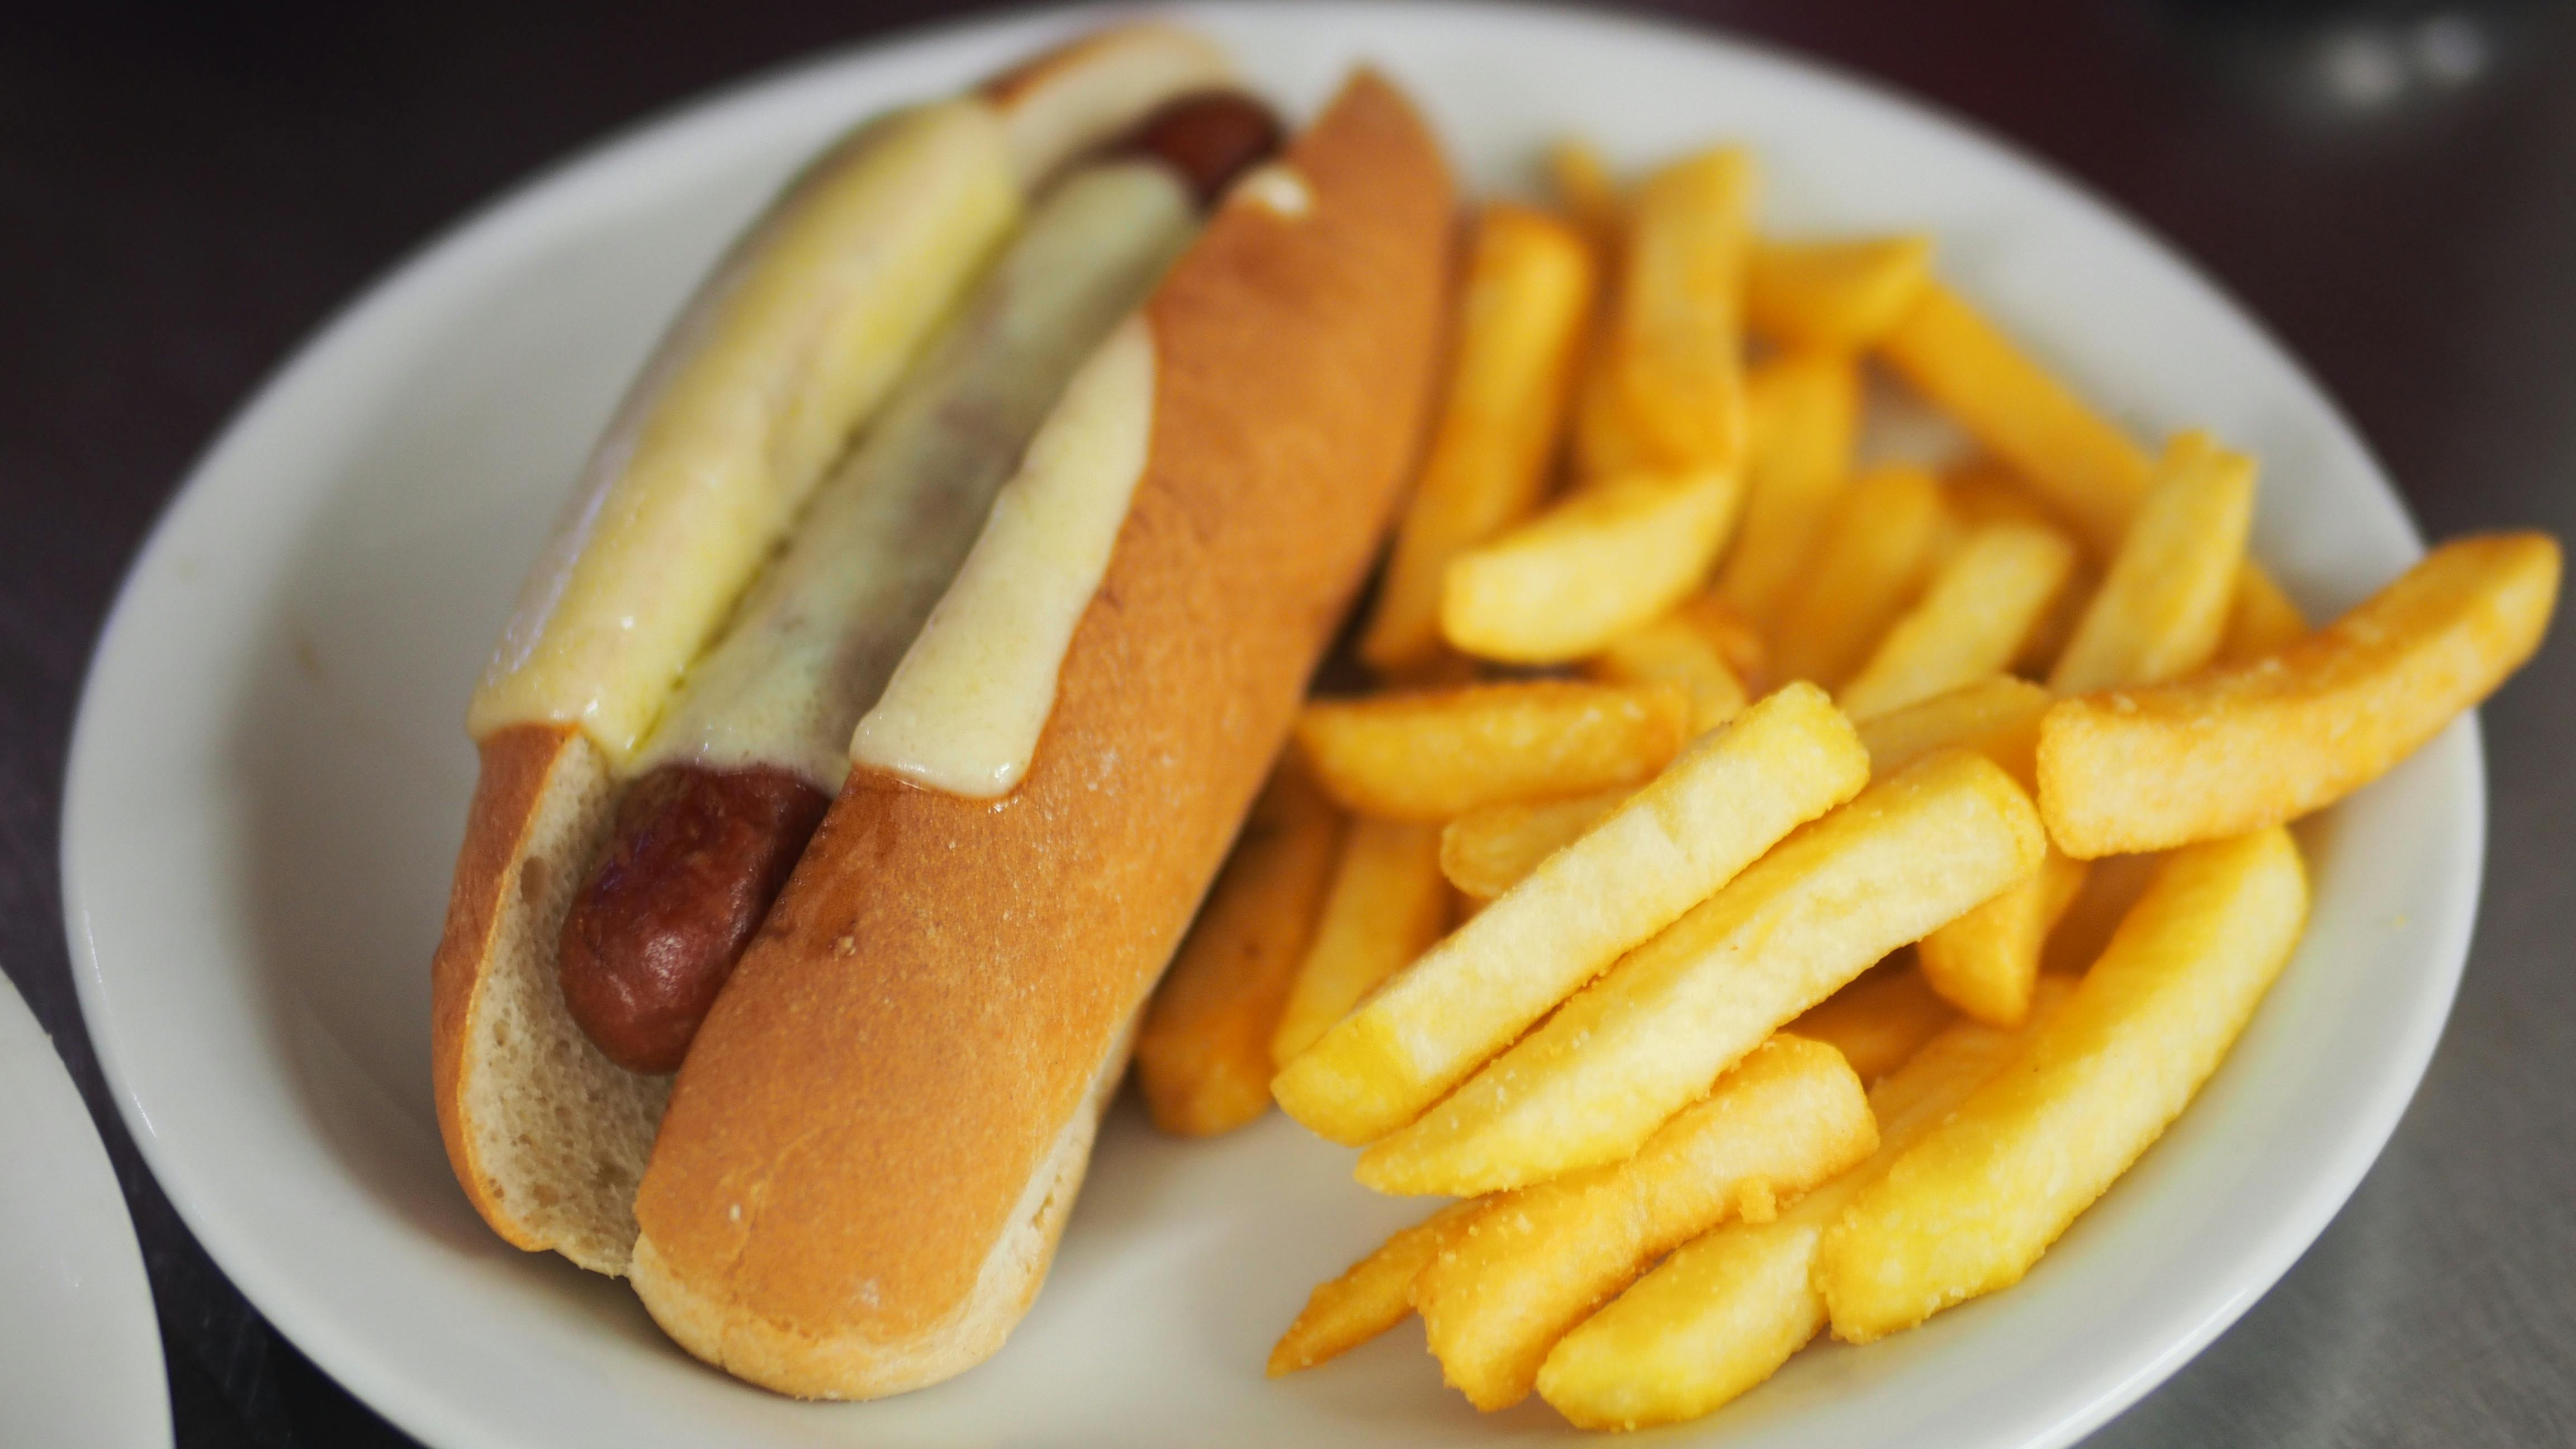 Free stock photo of hot dog, hotdog, hotdog and chips